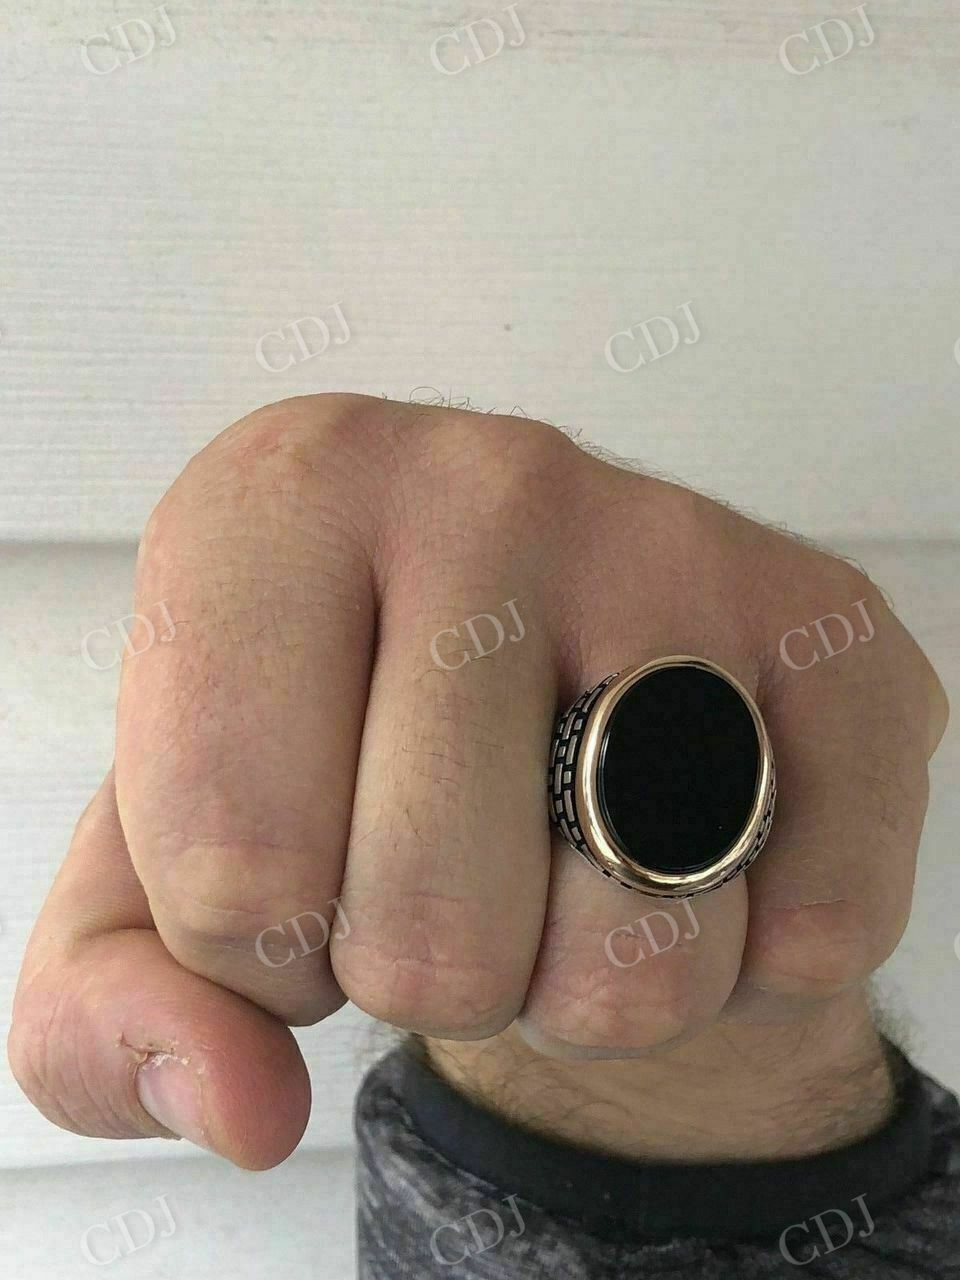 Black Onyx Men's Large Ring  customdiamjewel   